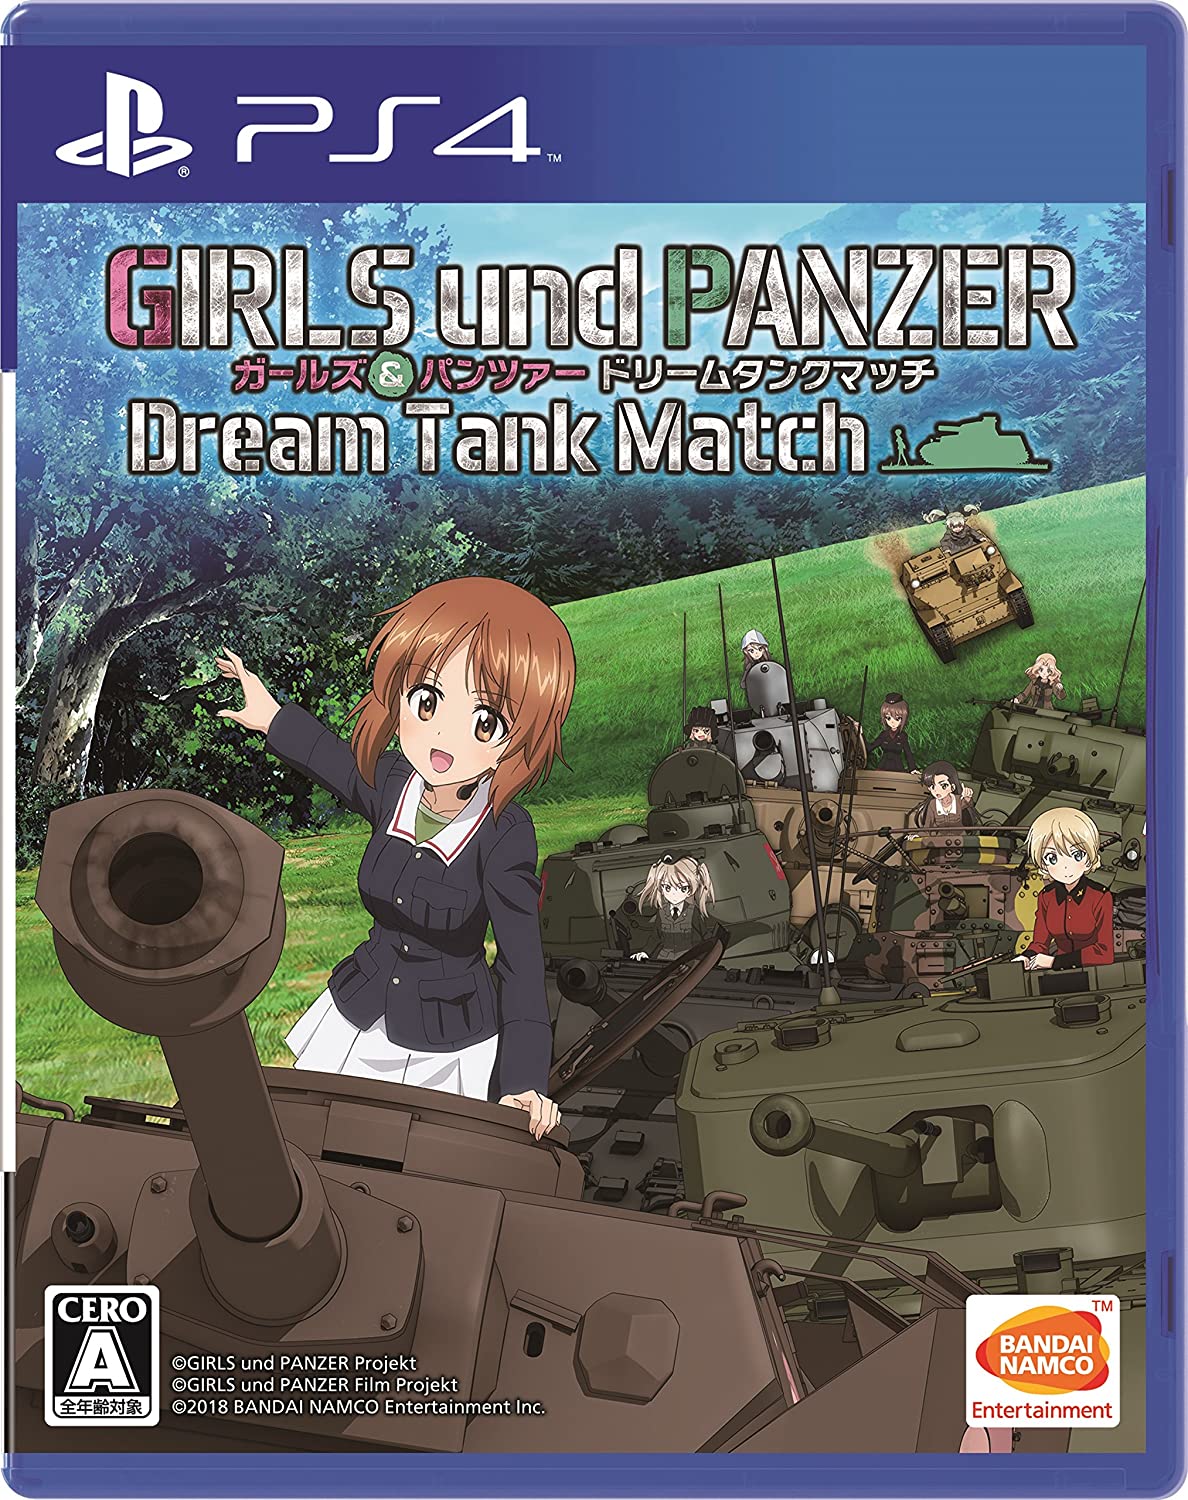 Girls und Panzer: Dream Tank Match player count stats